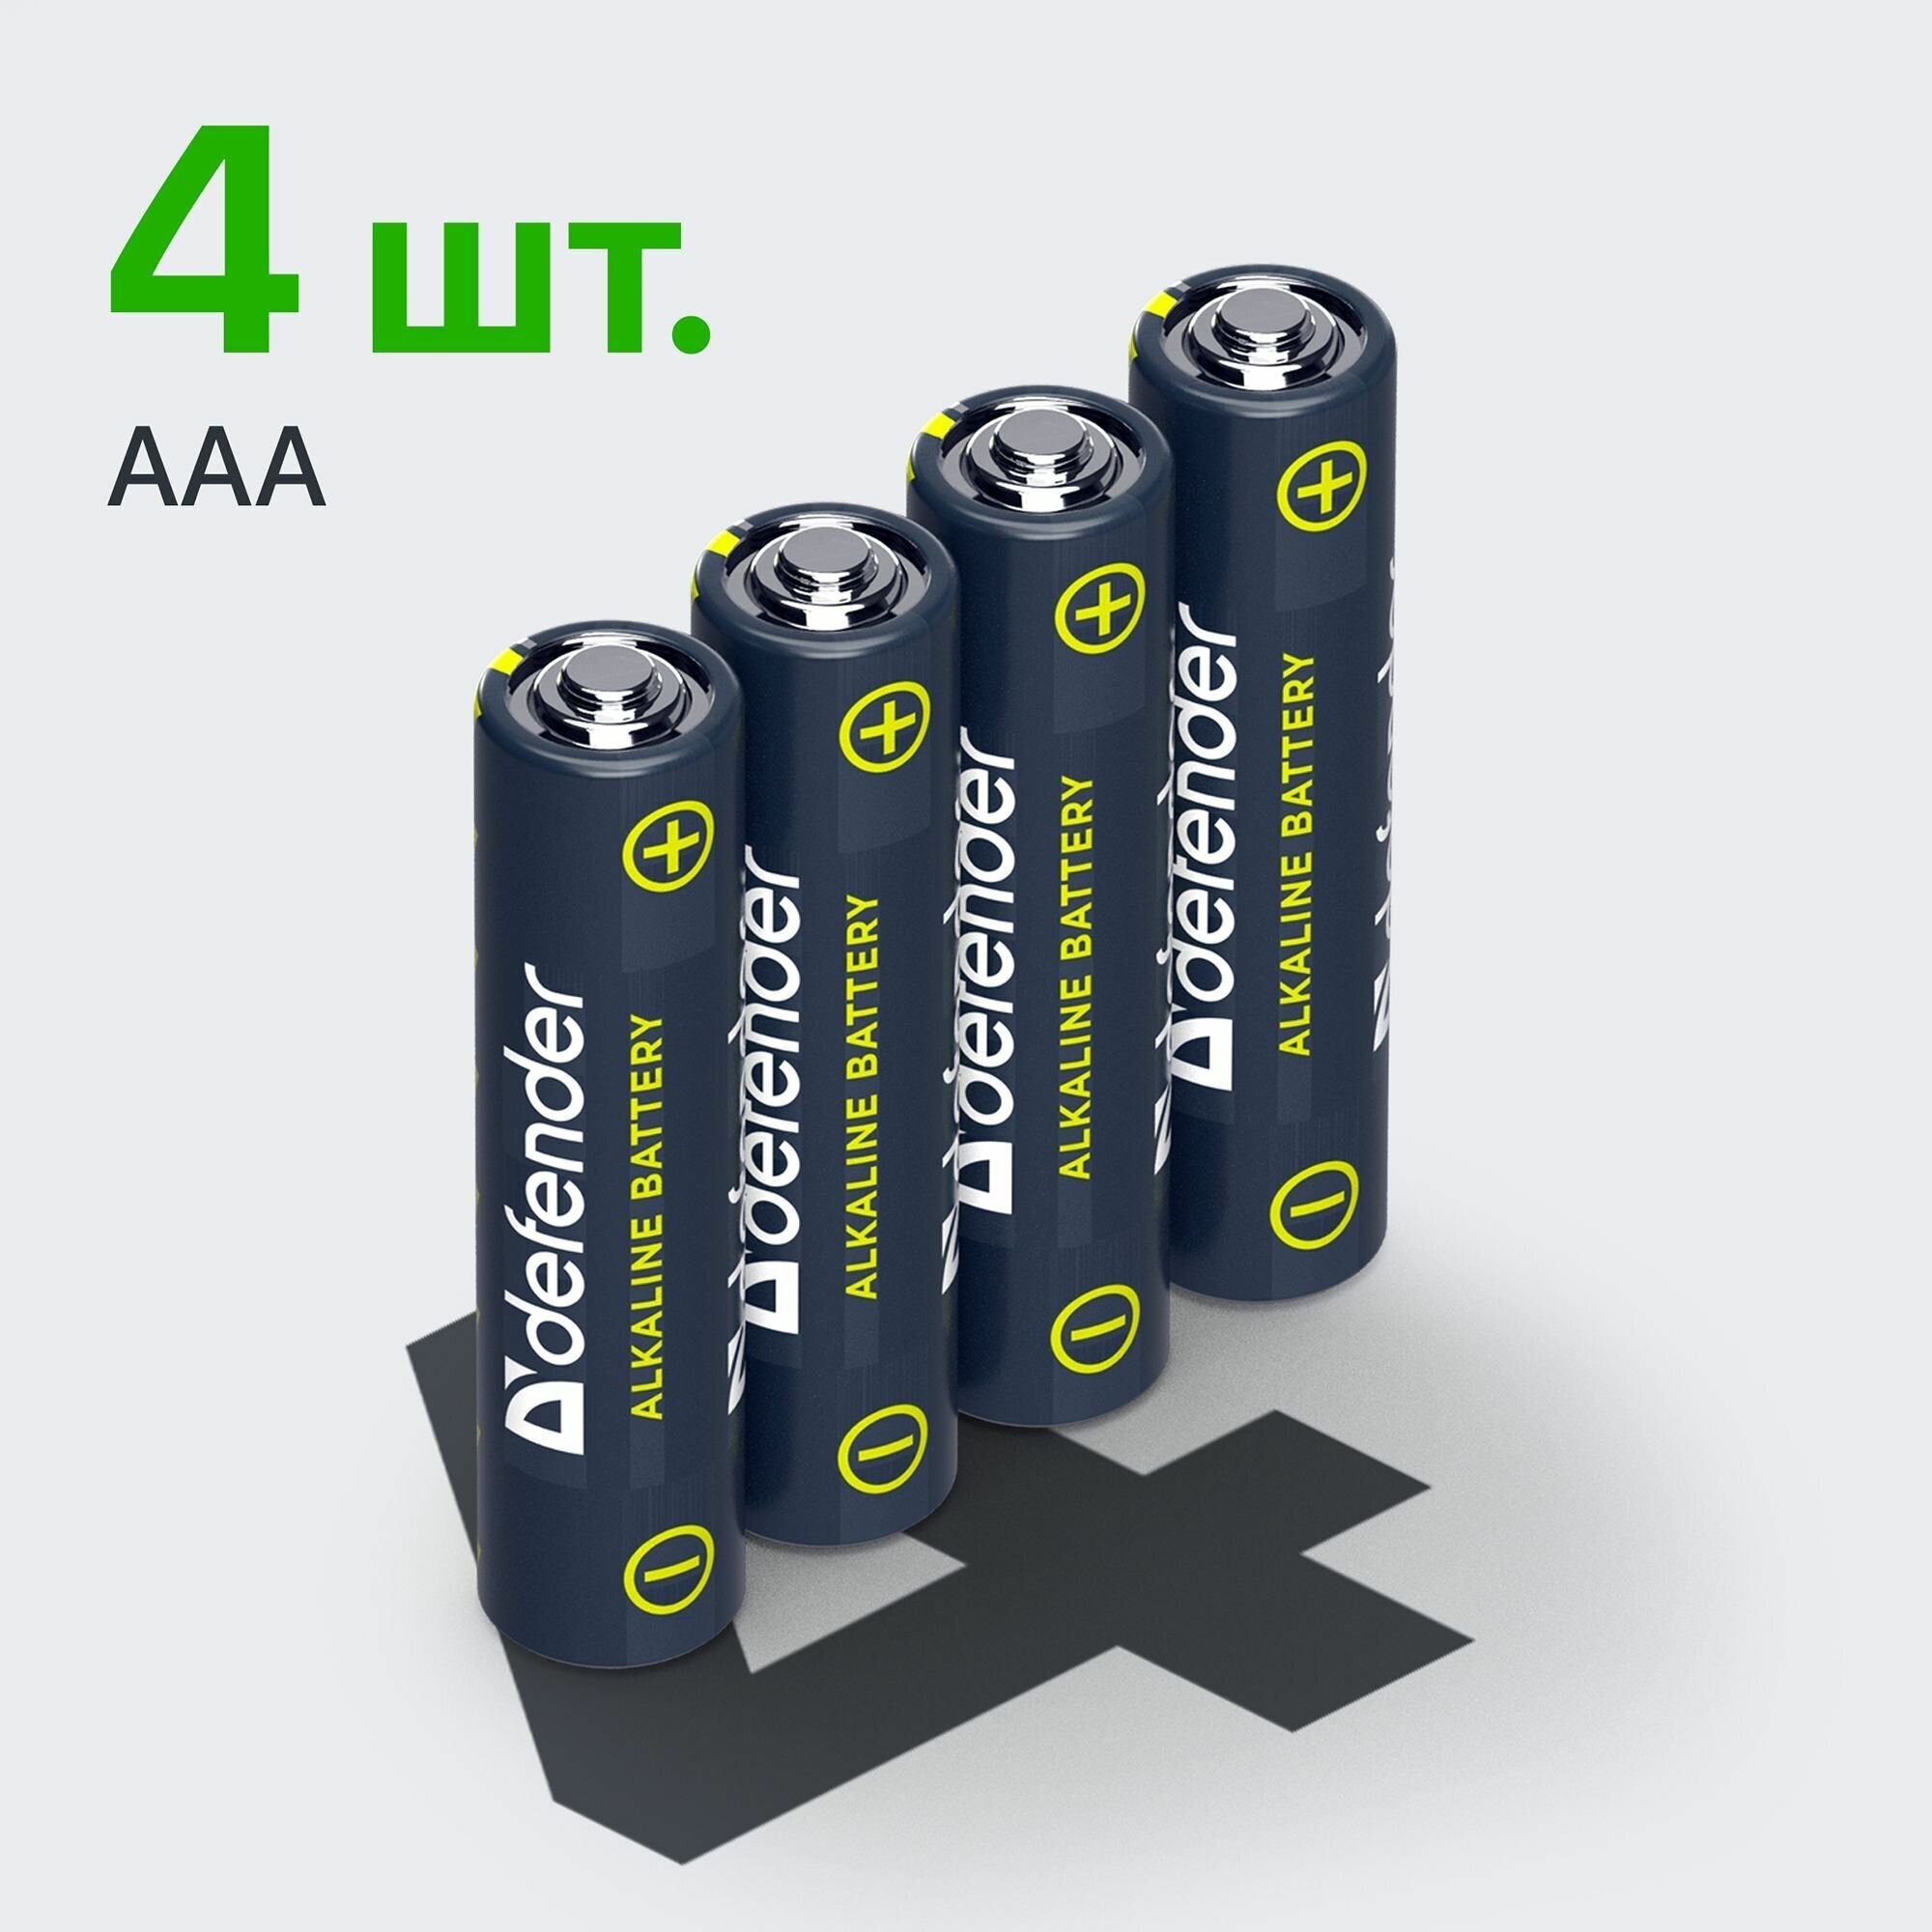 Батарейка Defender алкалиновая AAA LR03